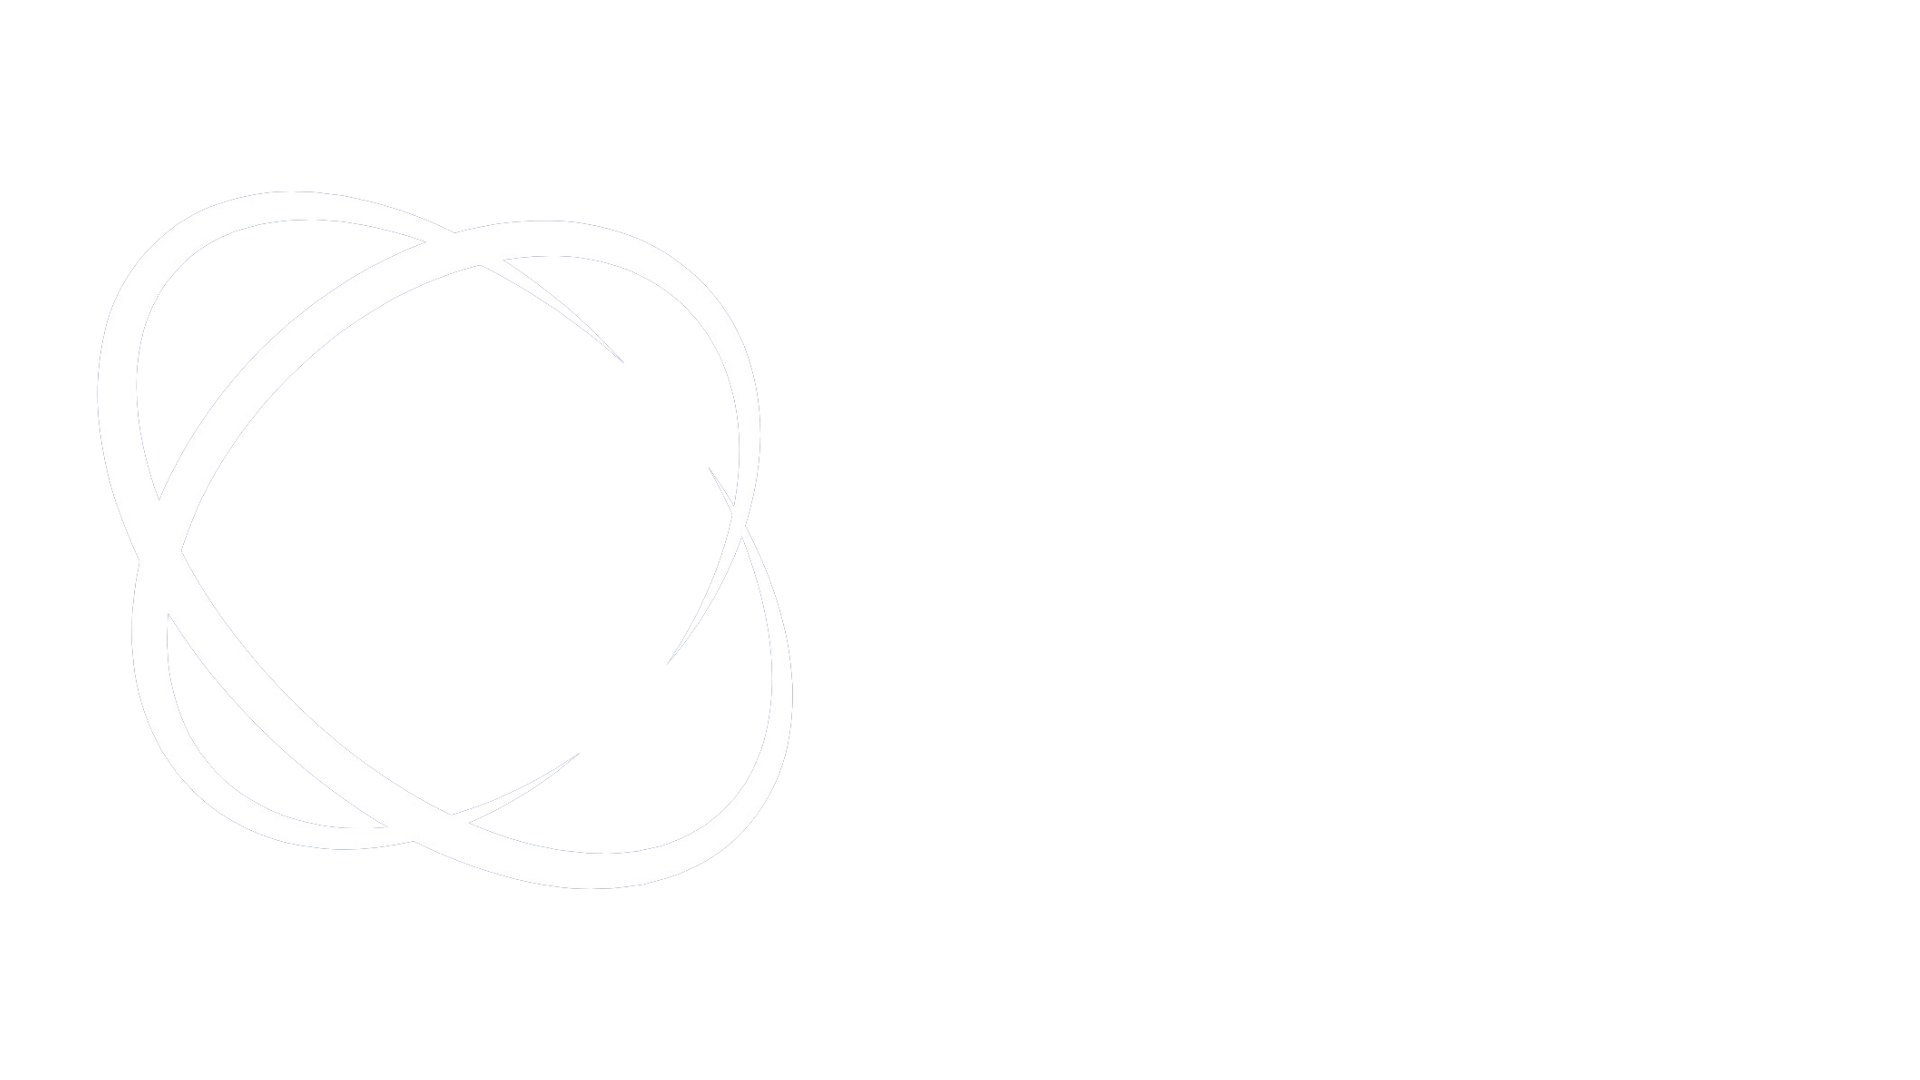 360 Finance Network